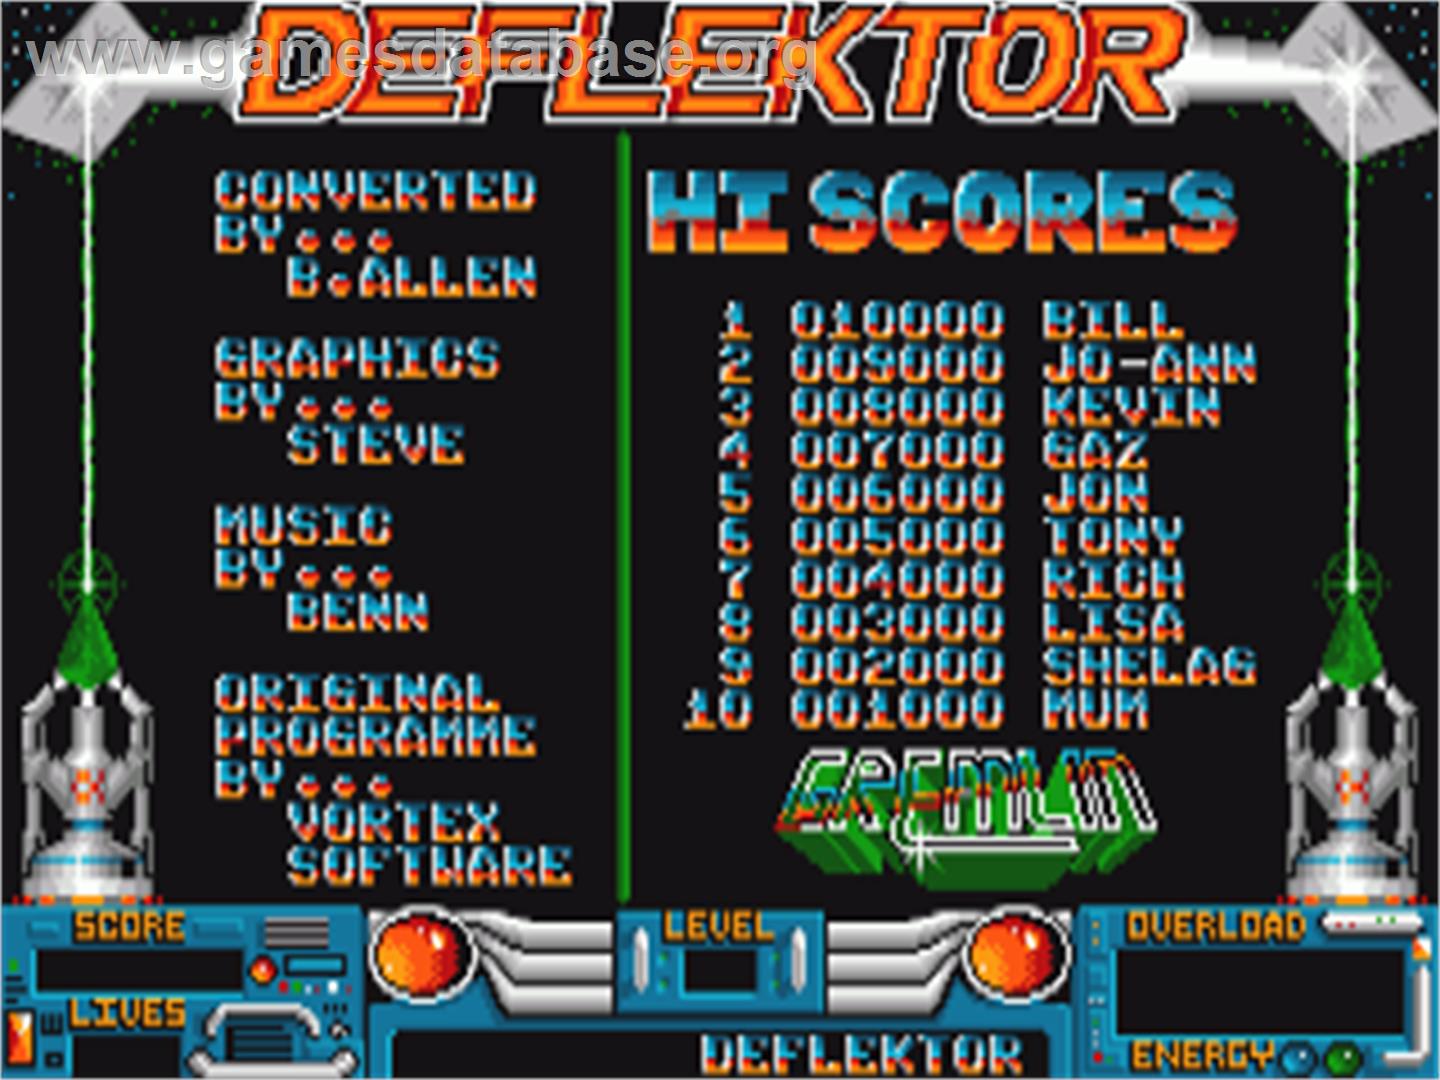 Deflektor - Commodore Amiga - Artwork - Title Screen